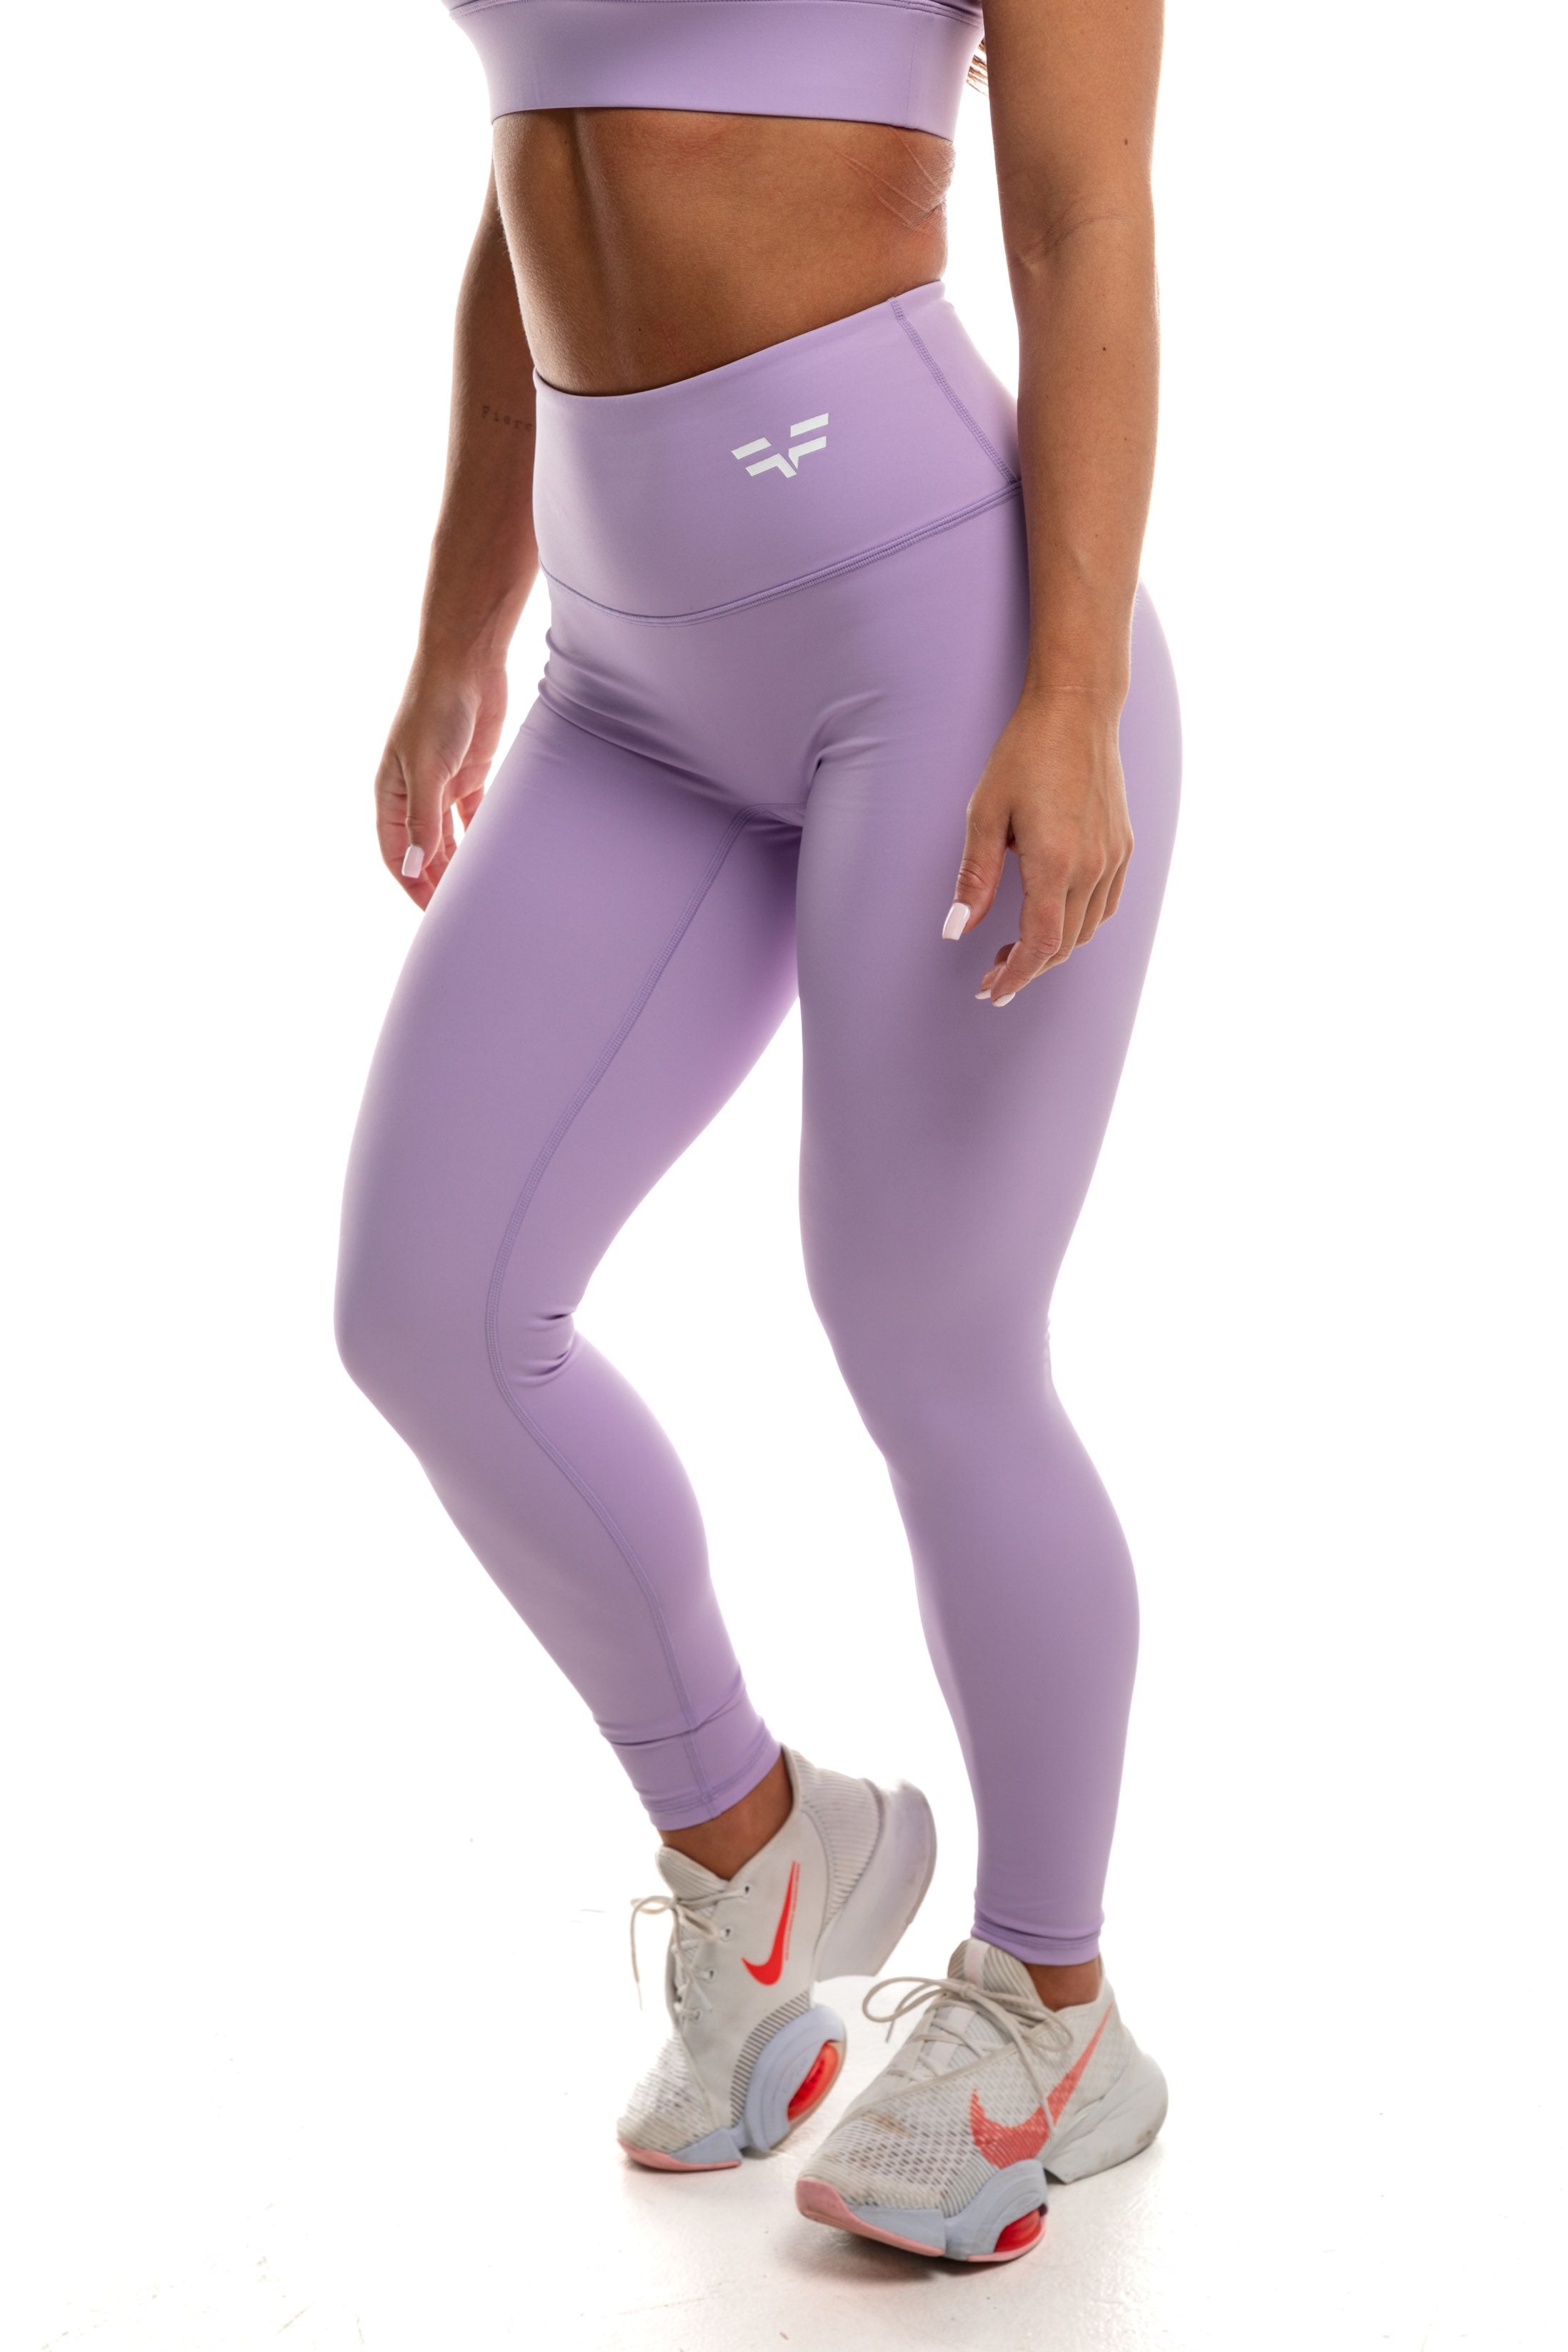 GymFreak Women's Vision Leggings - Purple